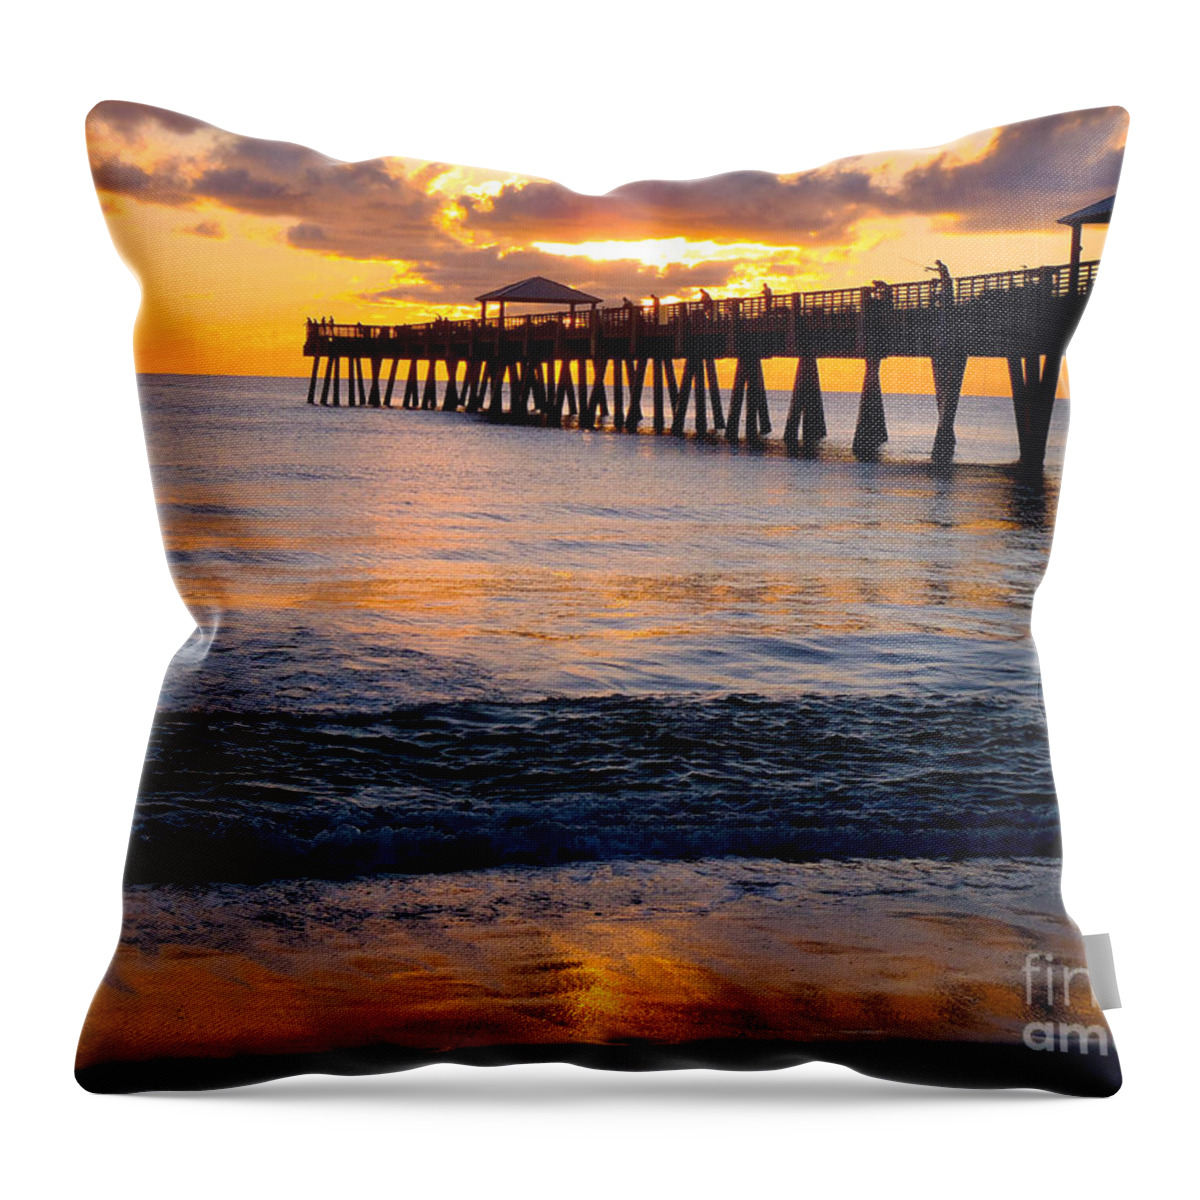 Pier Throw Pillow featuring the photograph Juno Beach pier by Carey Chen